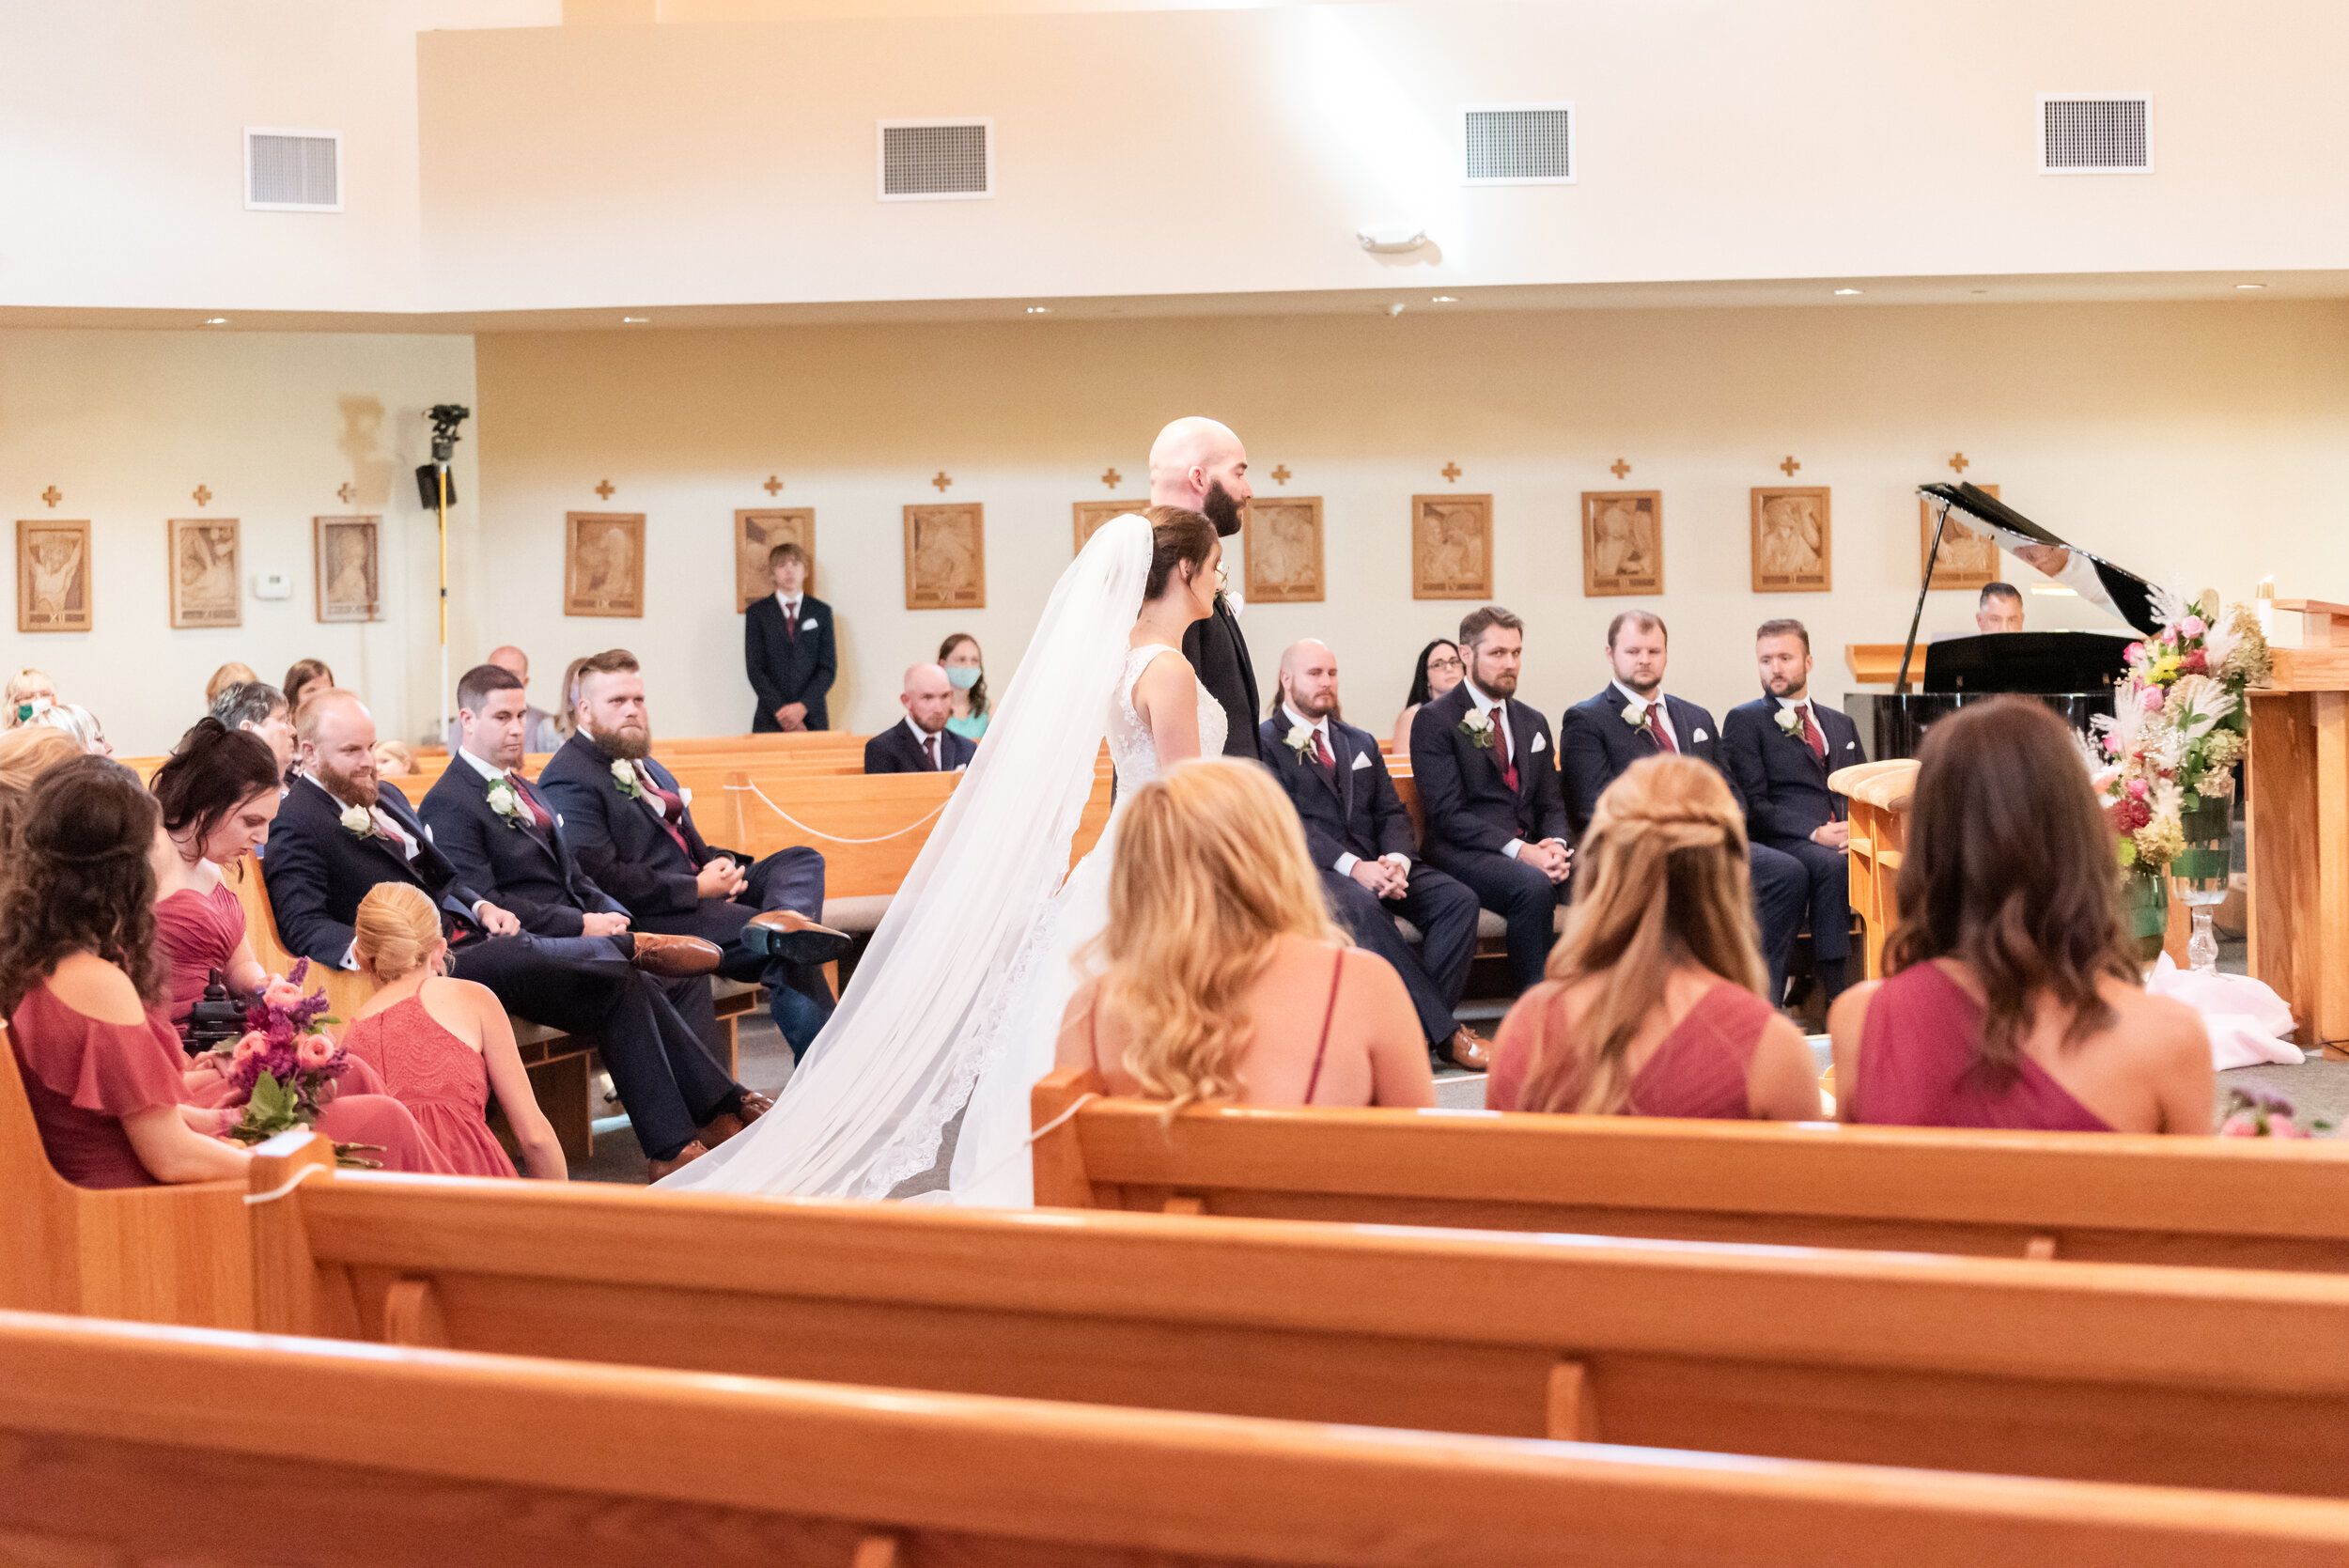 Voss Shanahan Wedding - The Ceremony (229 of 250).jpg